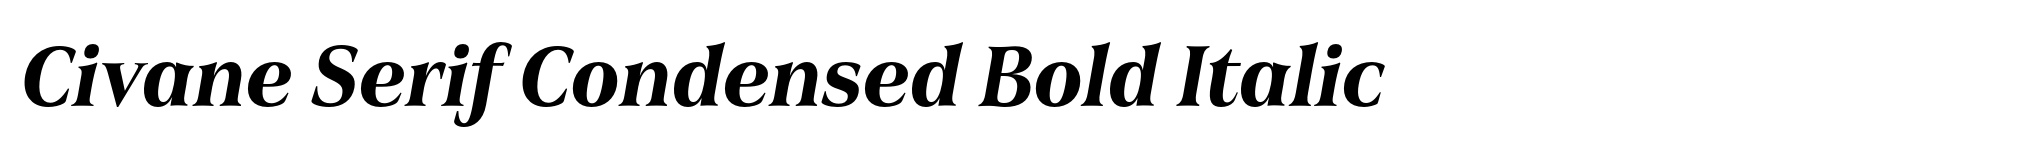 Civane Serif Condensed Bold Italic image